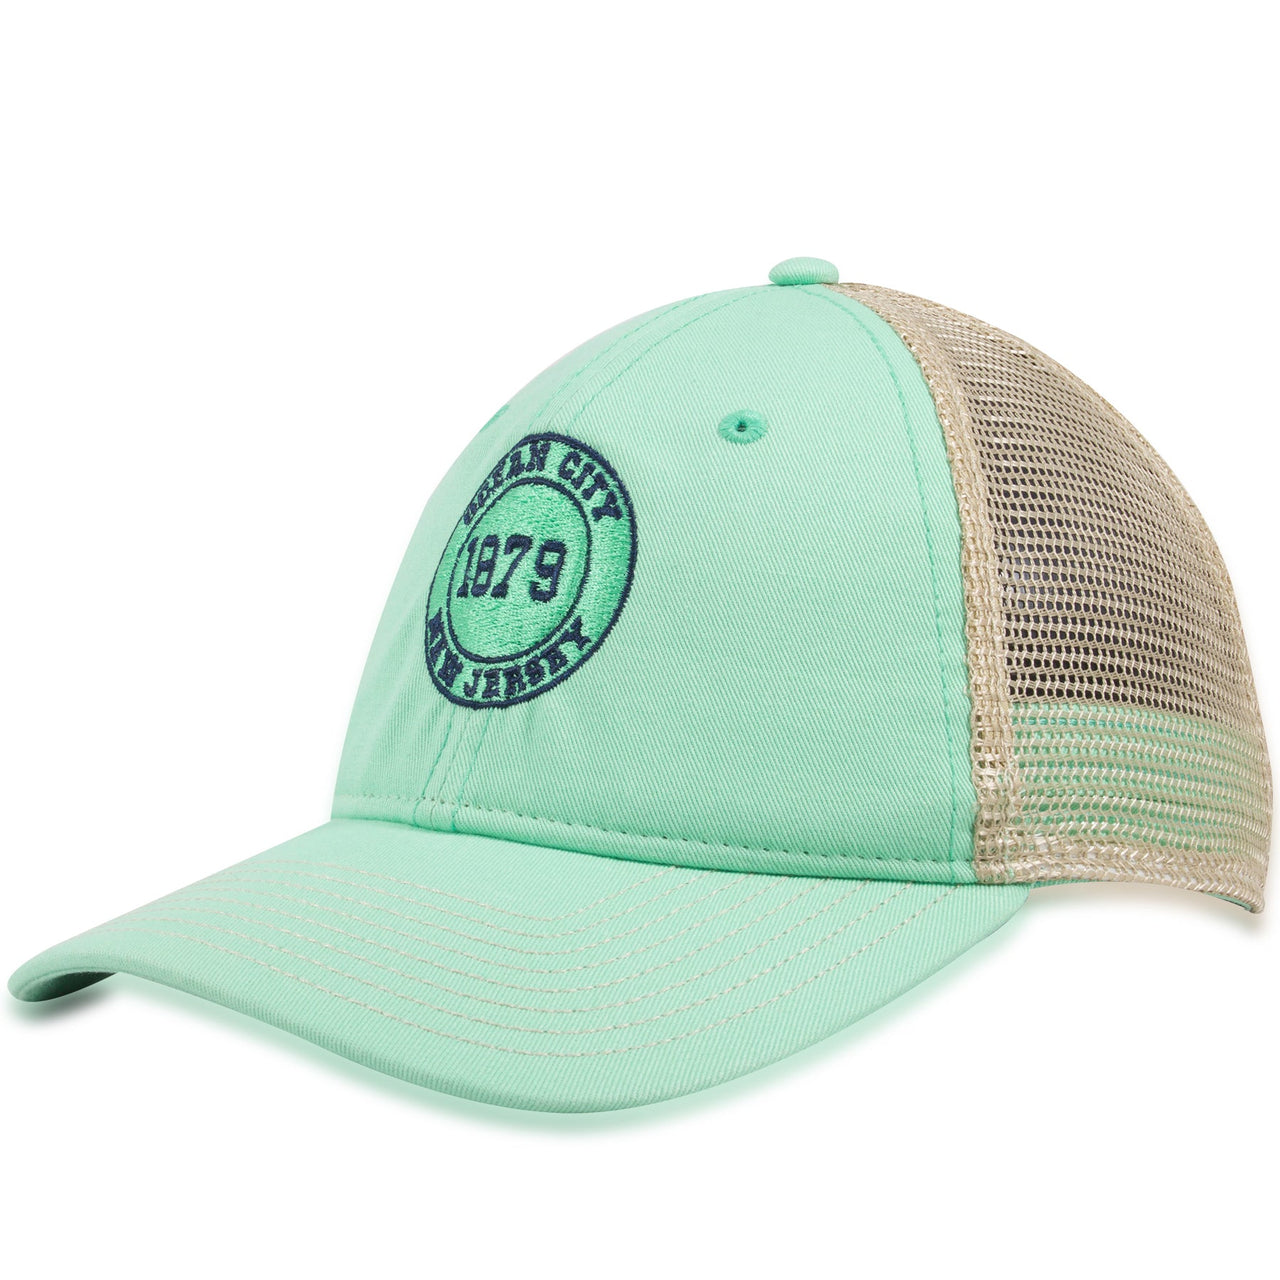 Ocean City New Jersey 1879 Mint Green / Khaki Mesh Trucker Hat